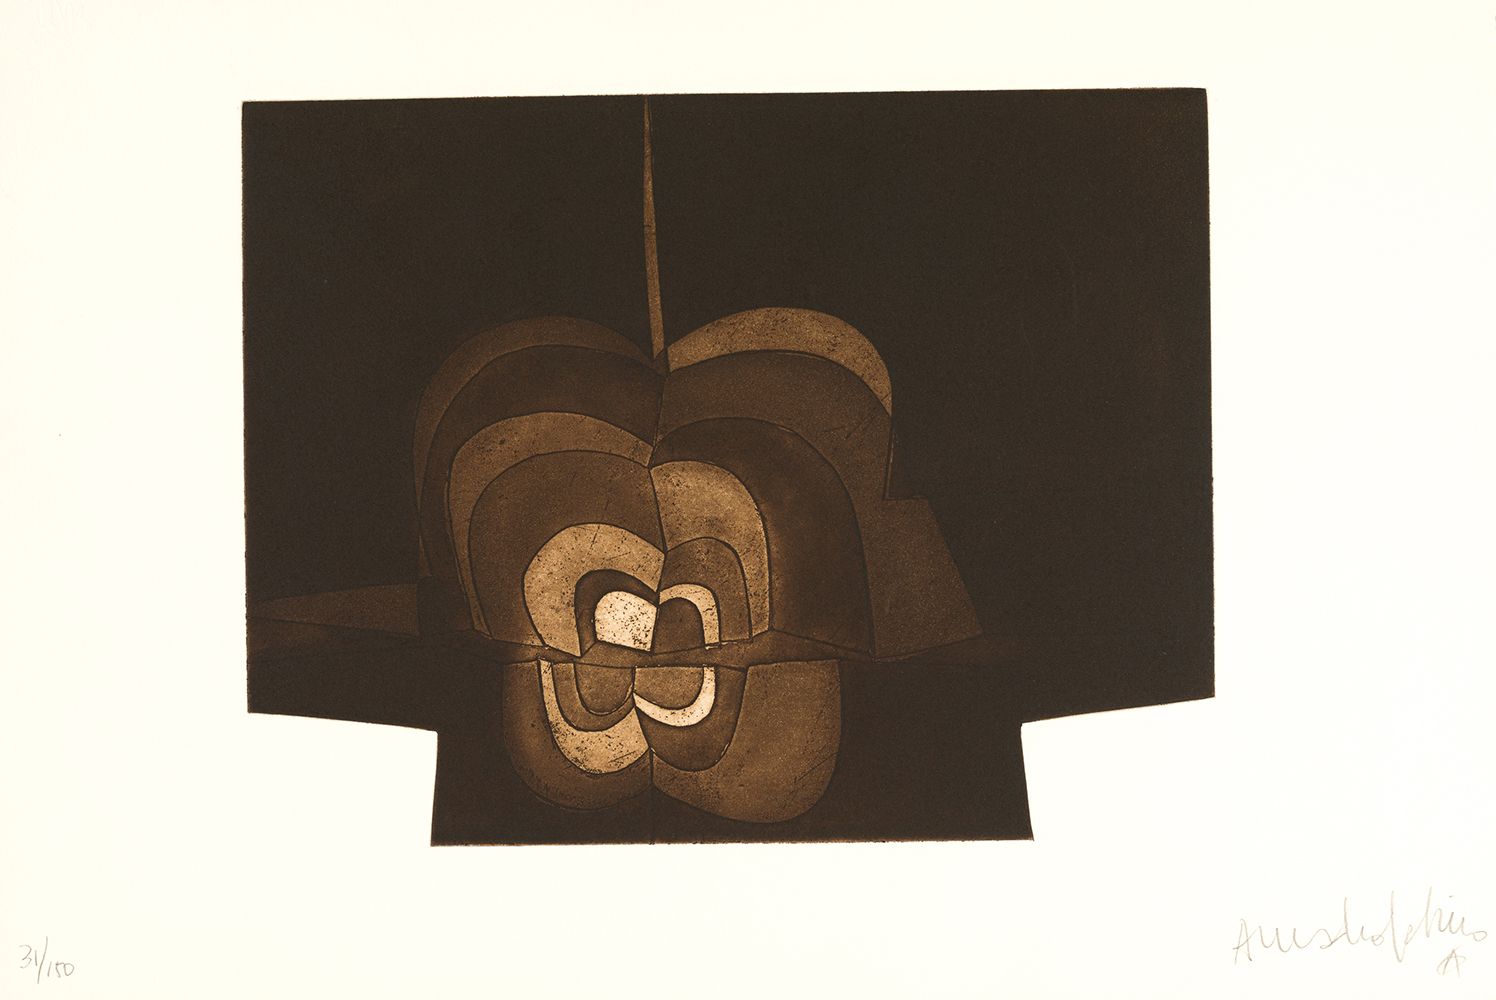 AMADEO GABINO (1922 / 2004) "Composition" 底部有铅笔签名和31/150的字样，尺寸：25 x 32 cm。蚀刻